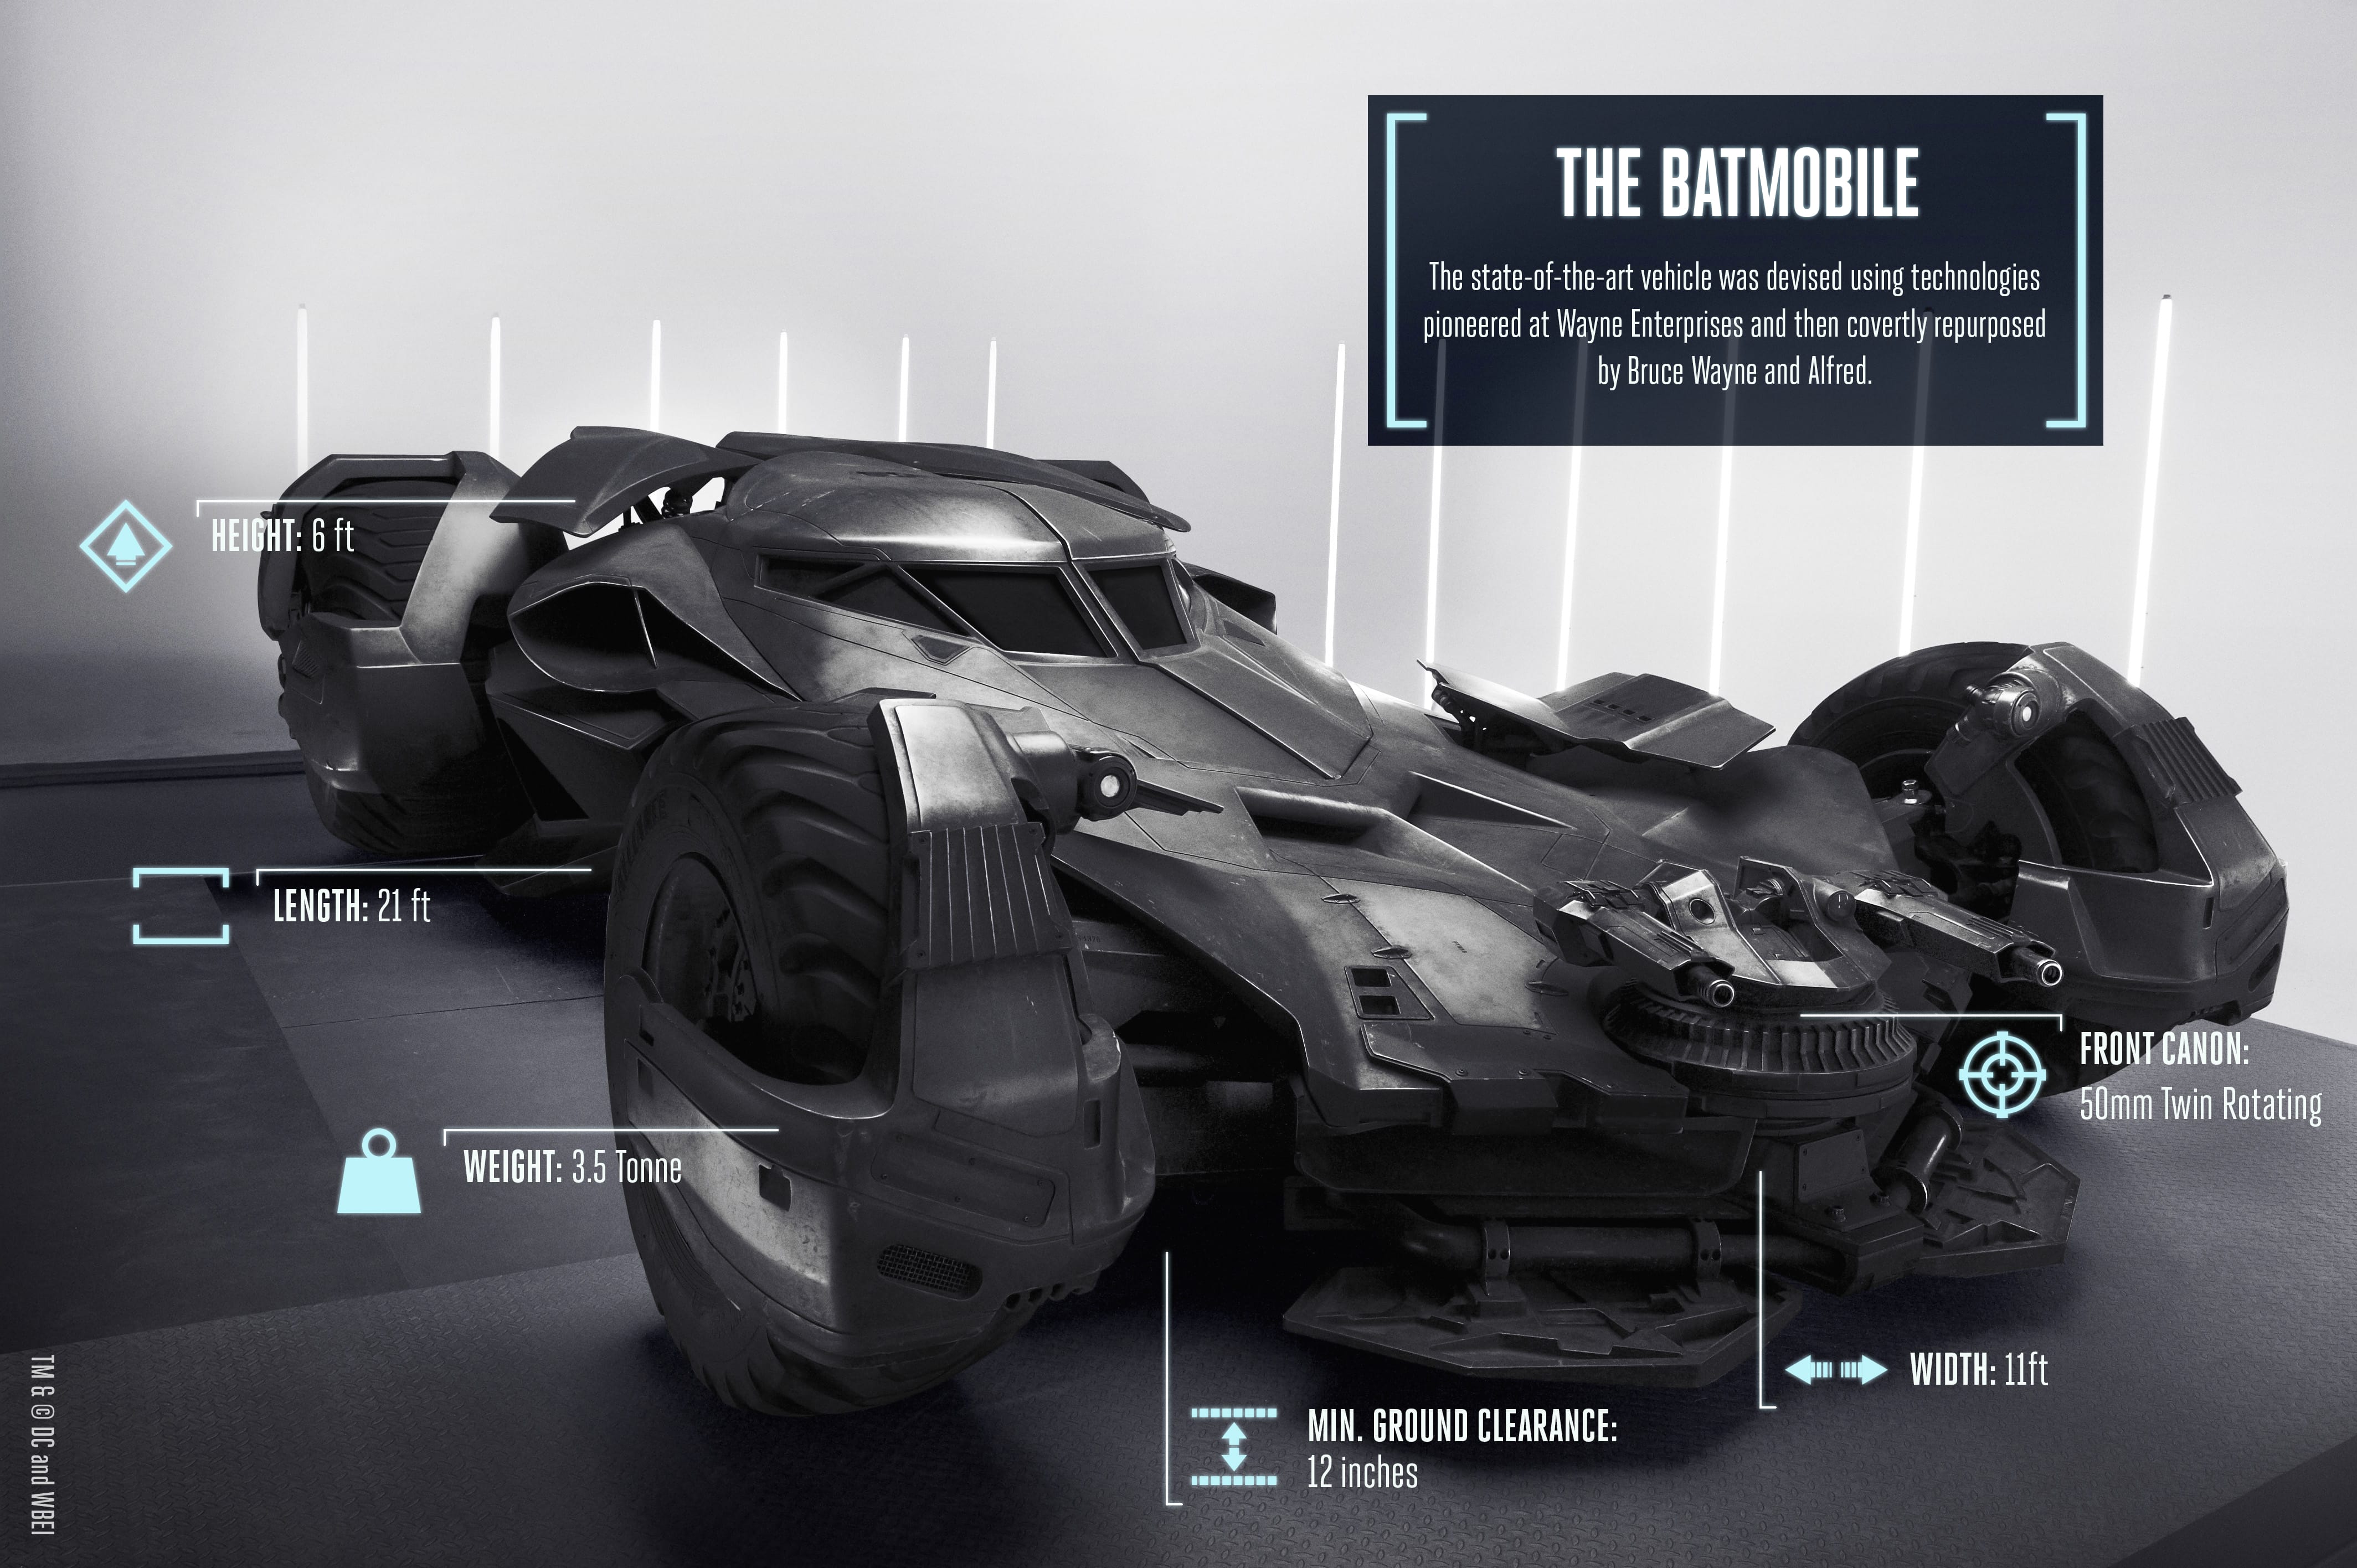 The Batmobile infographic